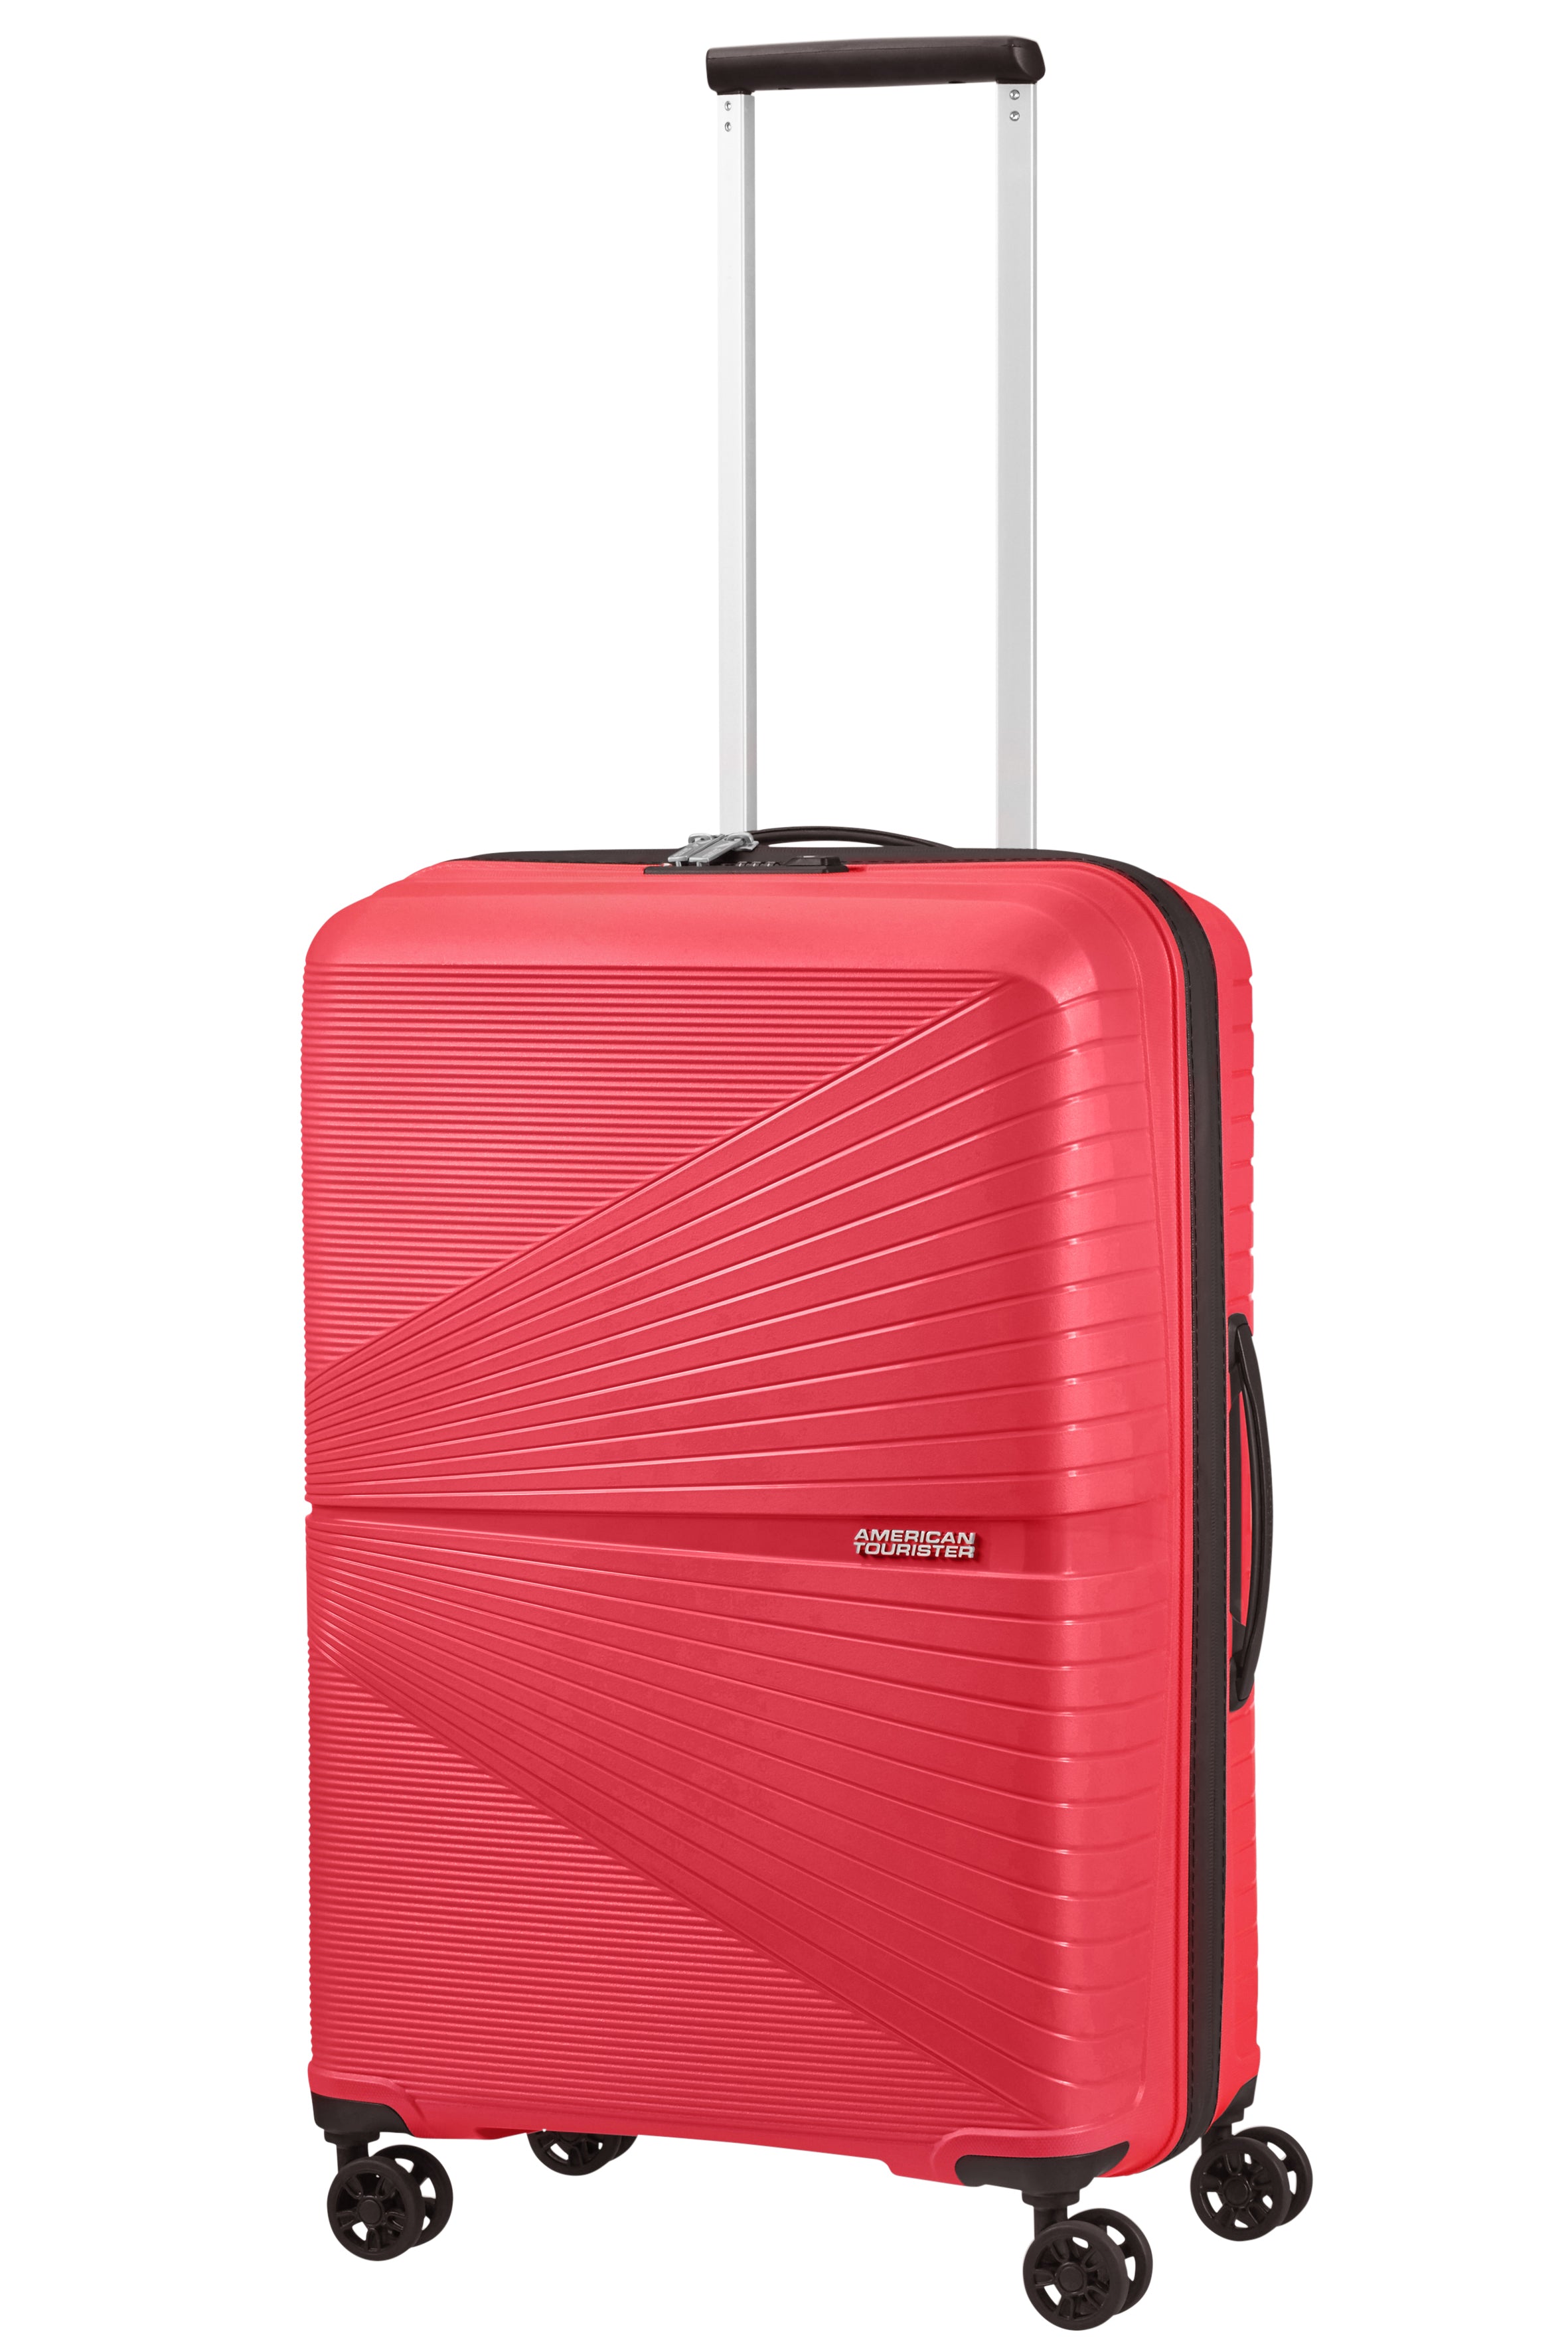 American Tourister - Airconic 67cm Medium 4 Wheel Hard Suitcase - Paradise Pink-1